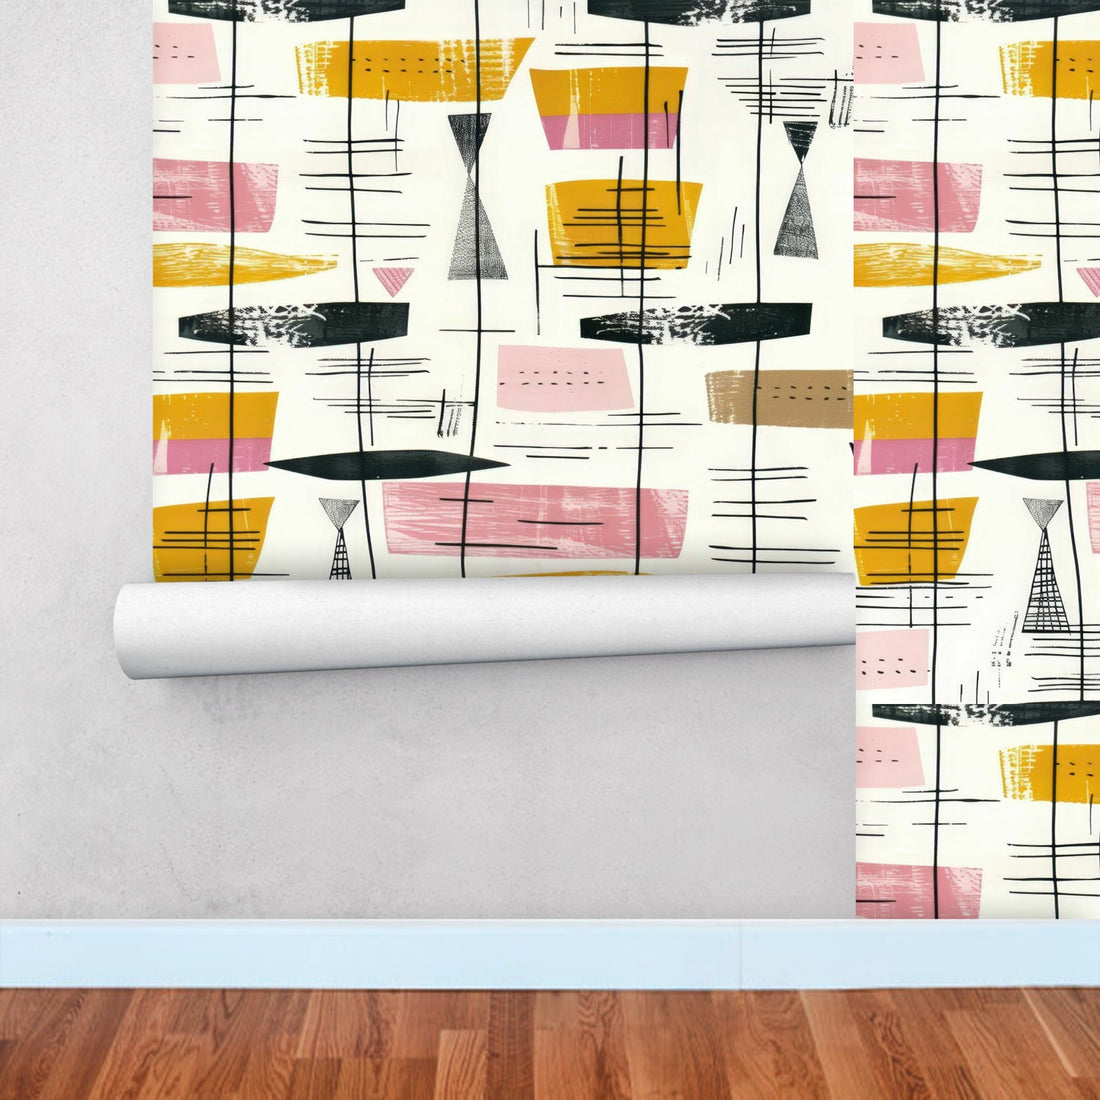 Kate McEnroe New York Mid Century Modern Geometric Peel And Stick Wallpaper, Retro Abstract Design, Vintage Home Decor, 1950s Style Wallpaper Panels, Living Room AccentWallpaper118549